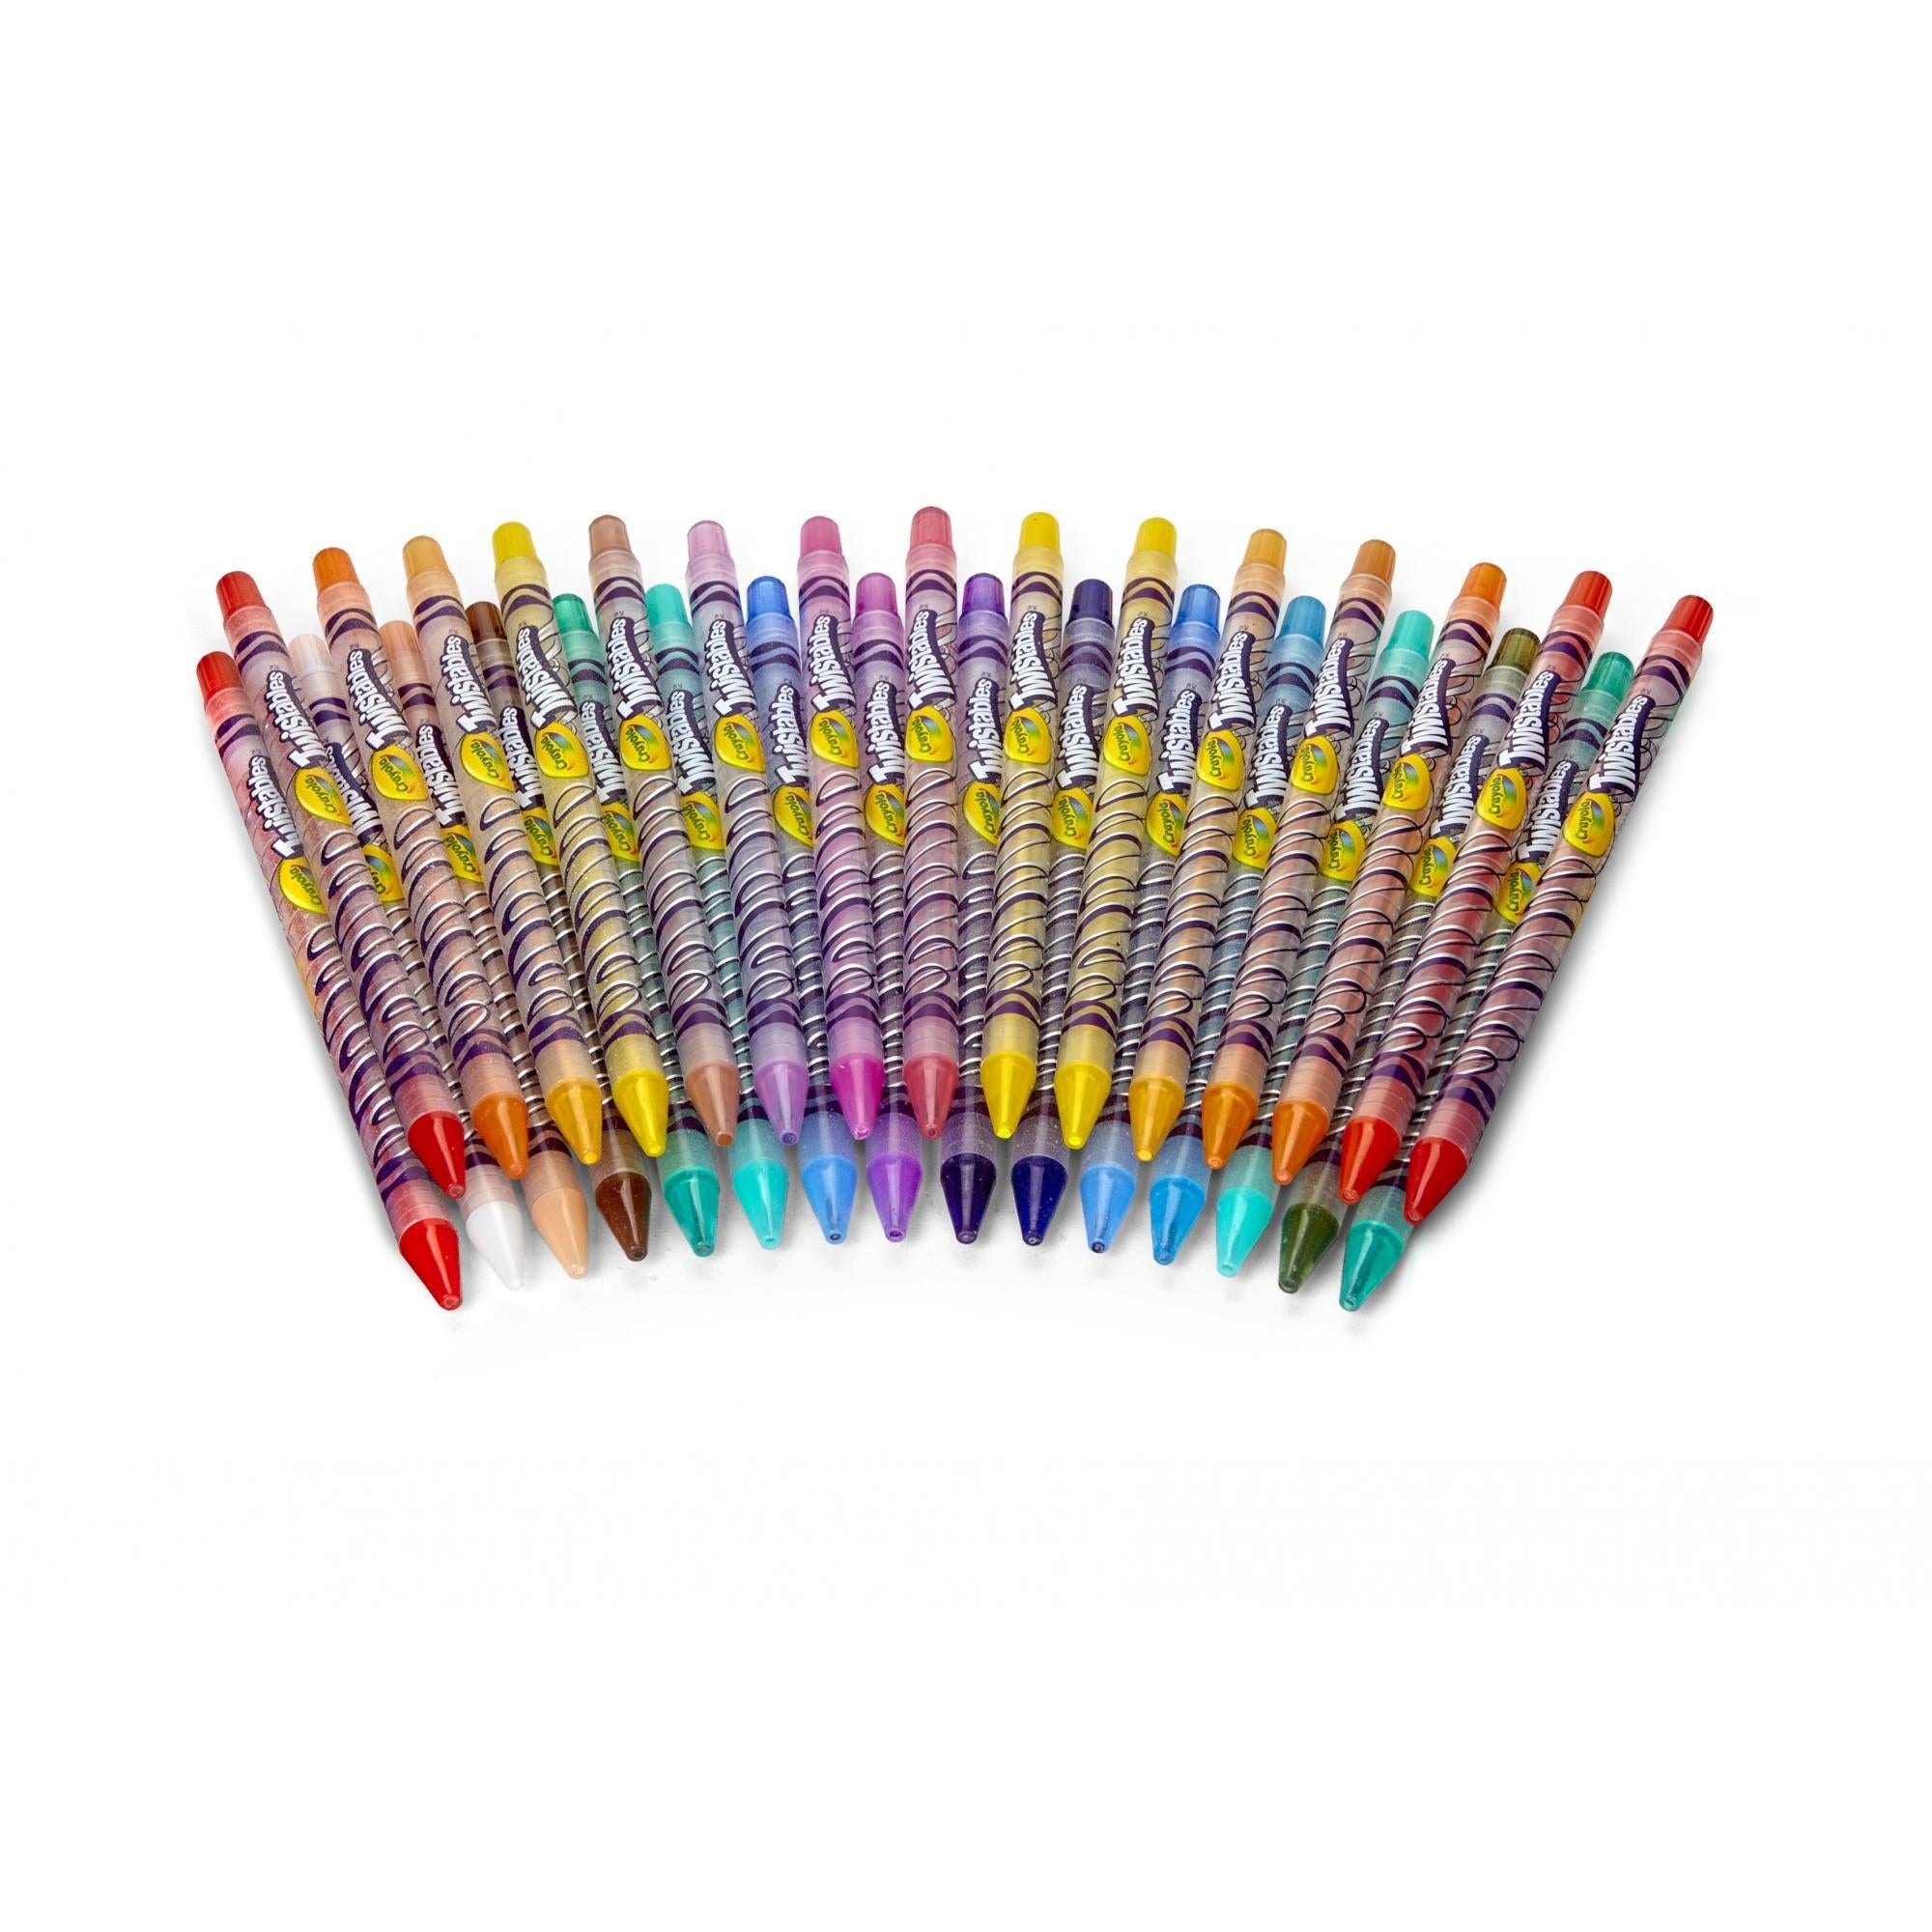 Crayola Colossal Creativity Tub, 90 Pieces